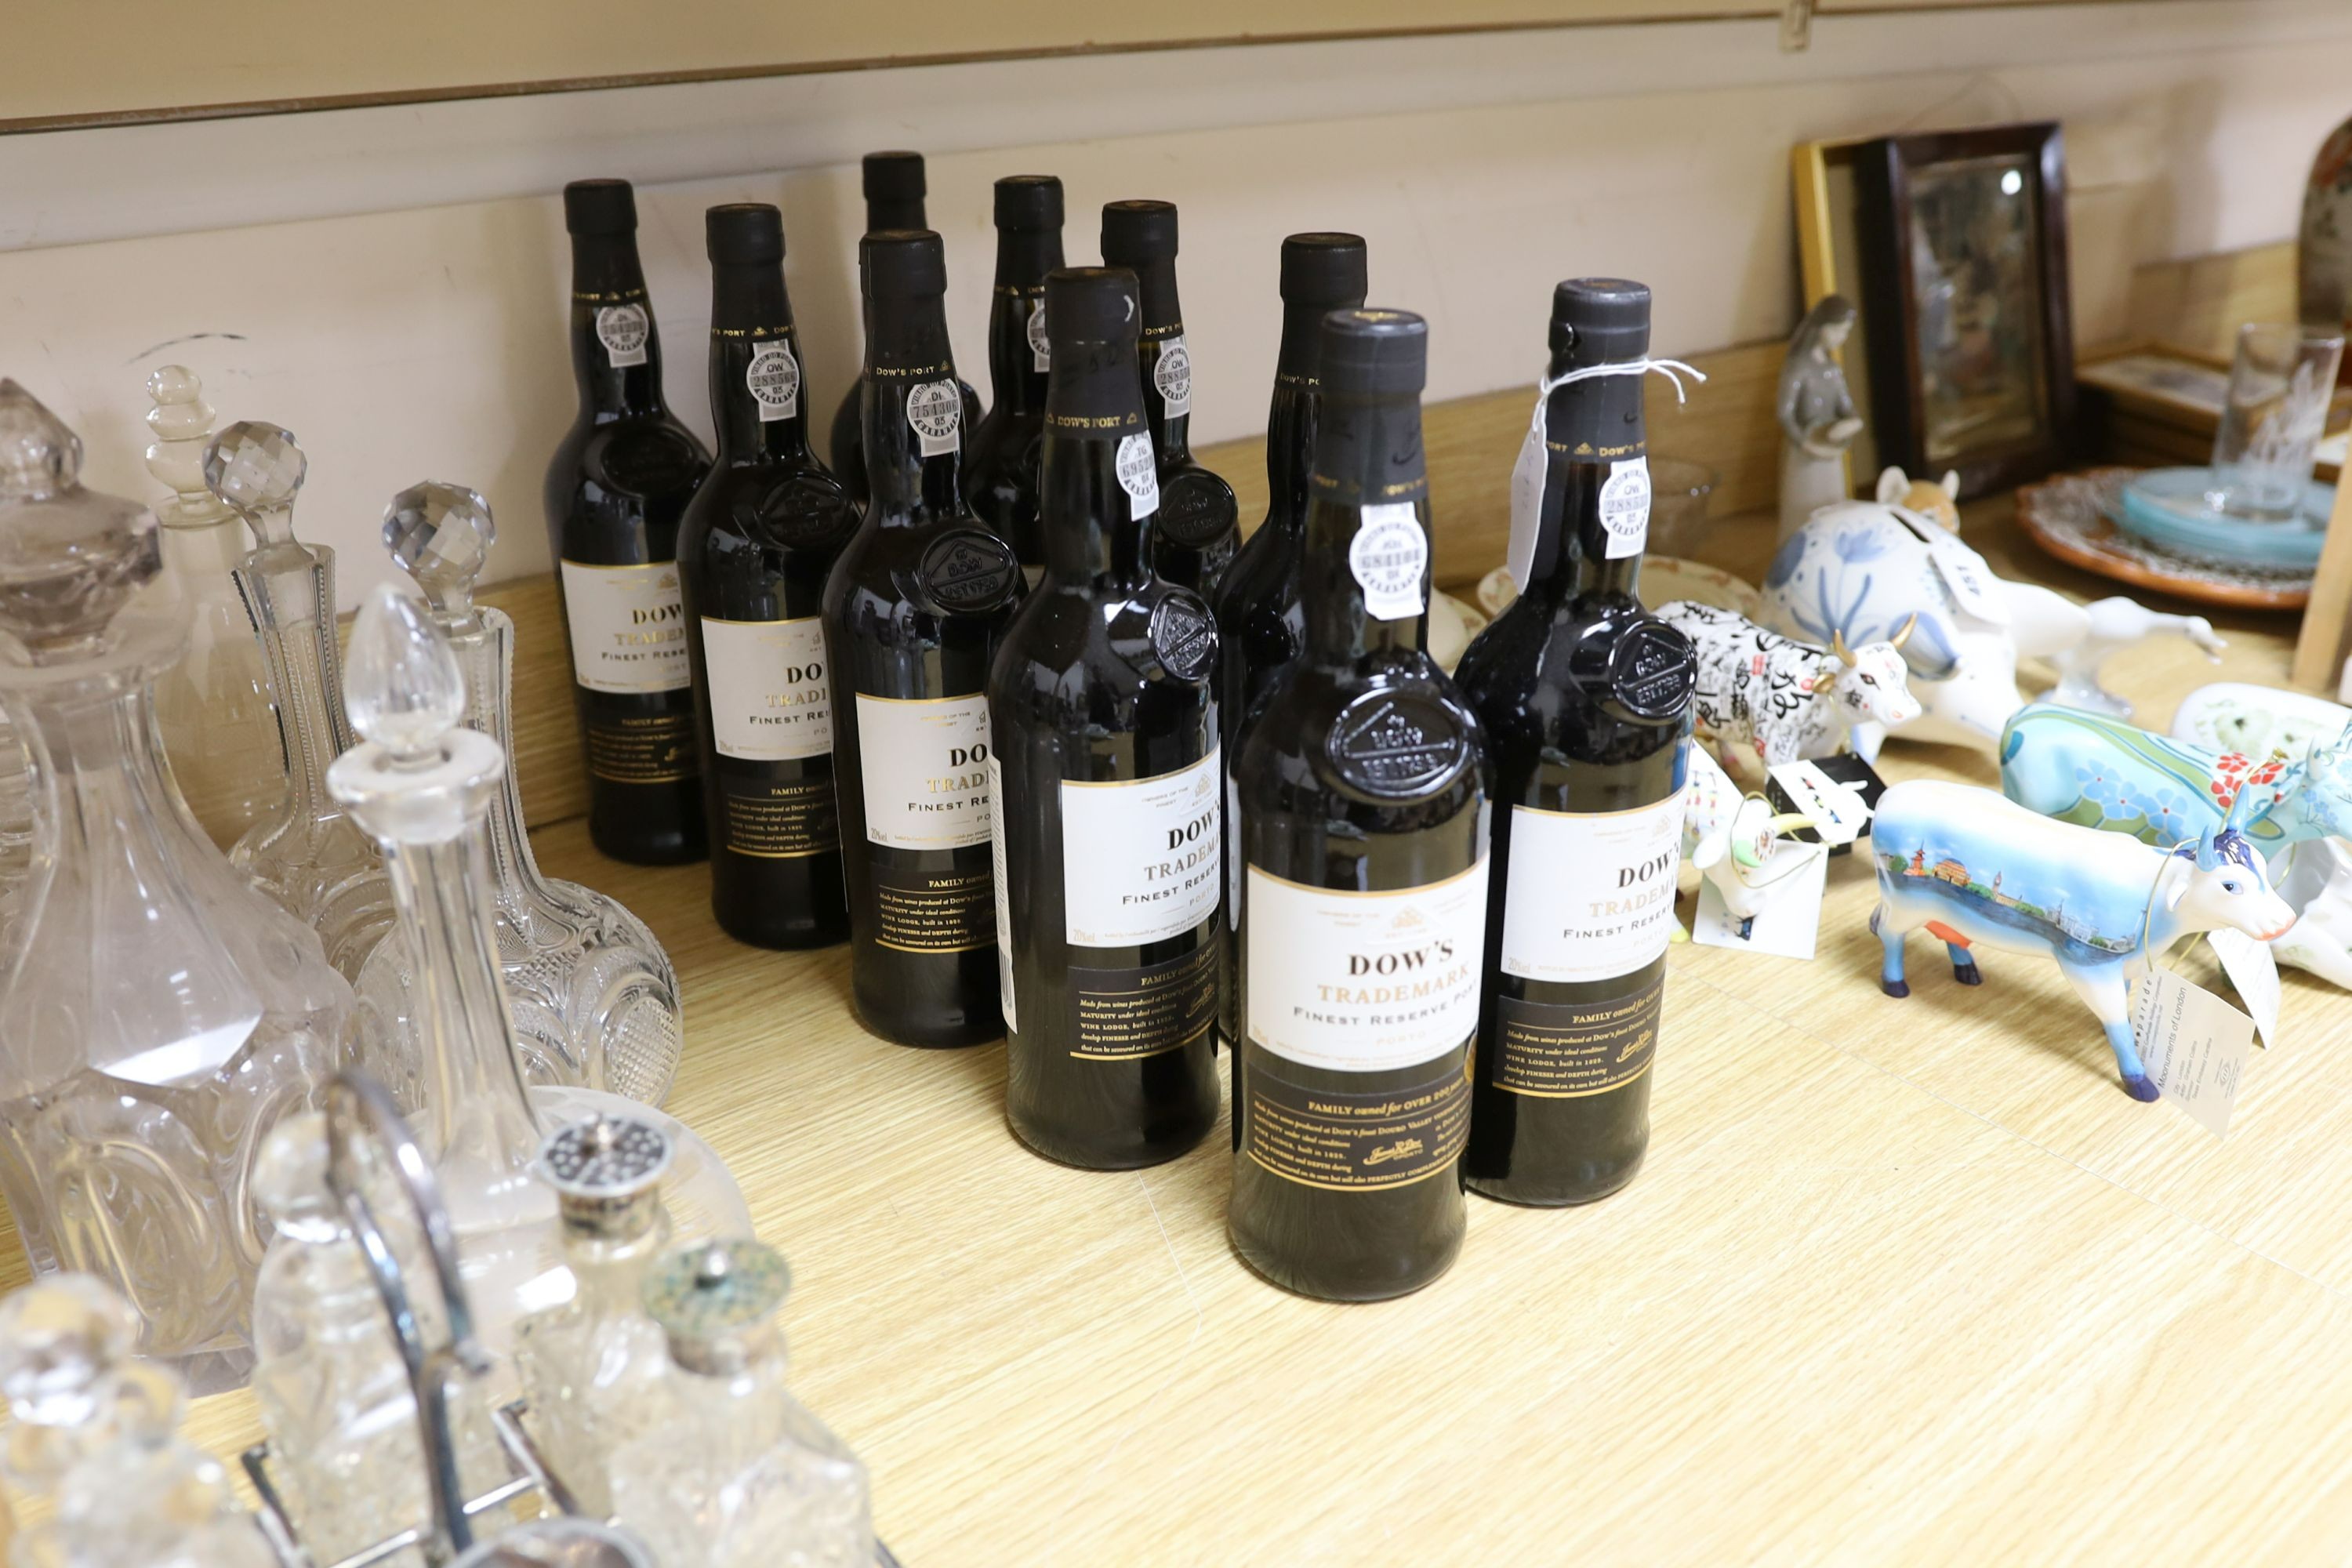 Ten bottles of Dows trademark finest reserve port